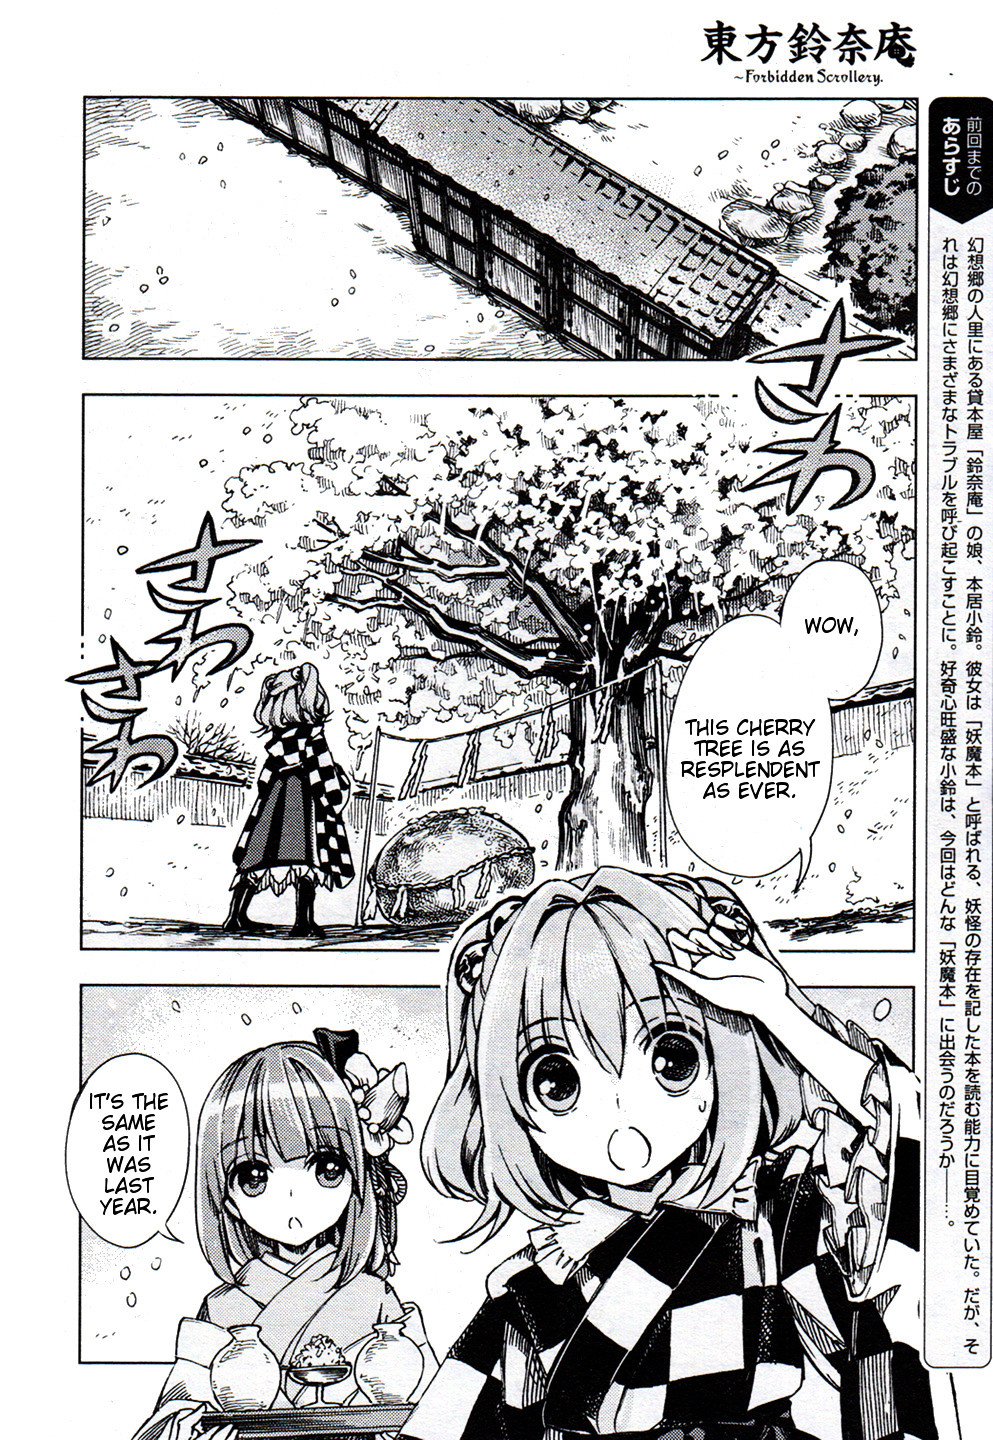 Touhou Suzunaan - Forbidden Scrollery. - Page 2